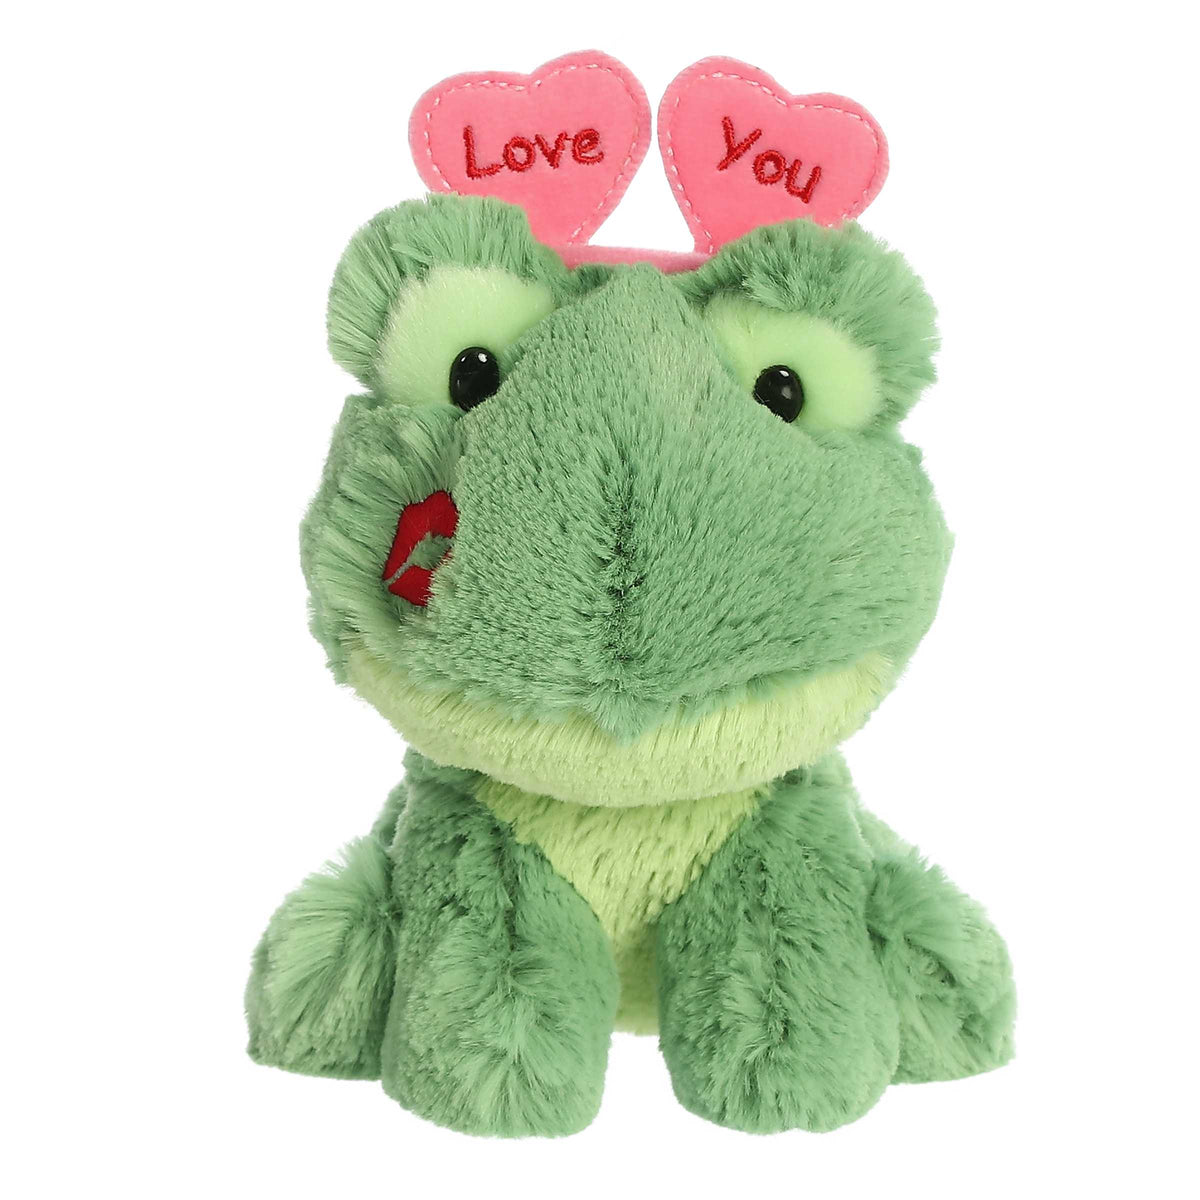 Aurora Small Green Love On The Mind 6 Love You Frog Heartwarming Stuffed Animal